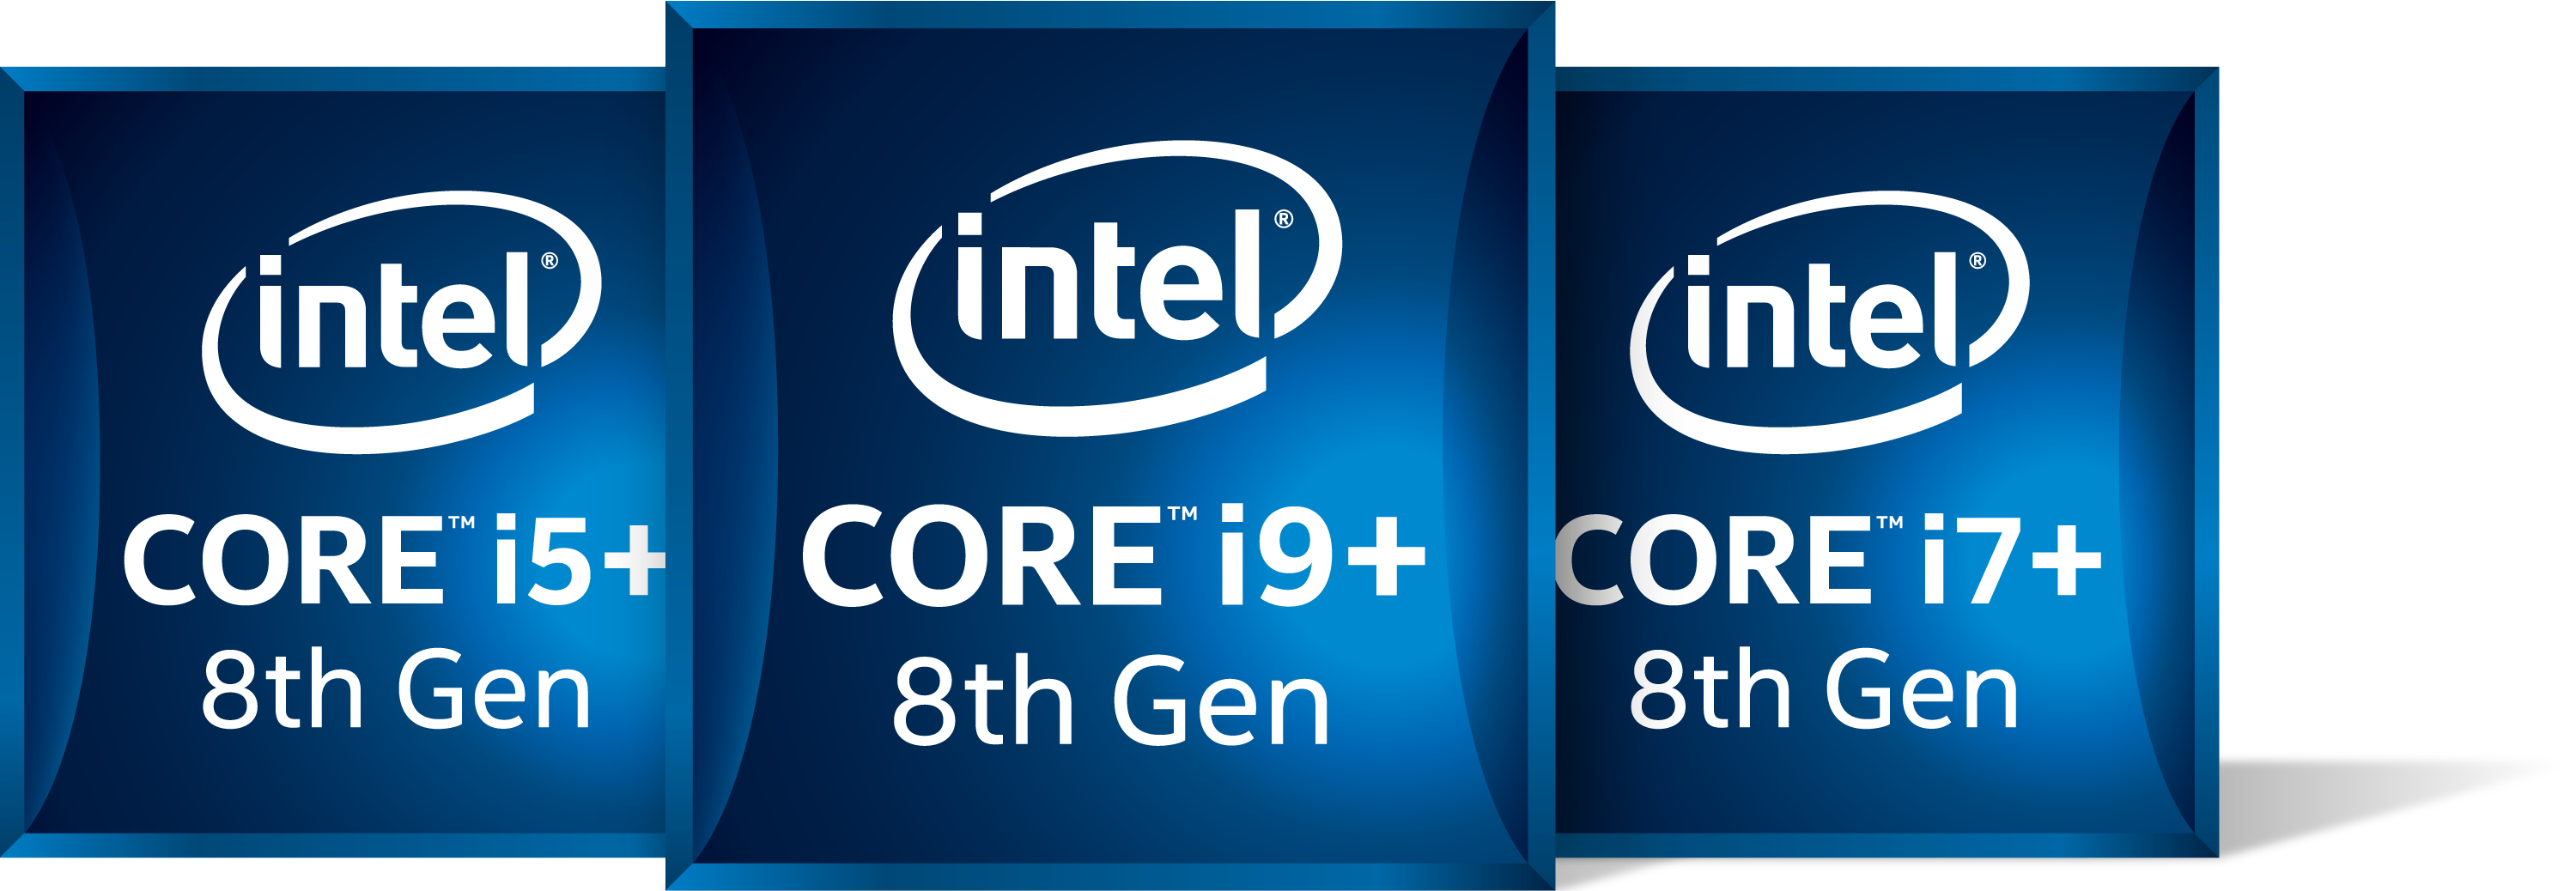 New Optane Branding Core i9+, Core i7+, Core i5+ Intel Expands 8th